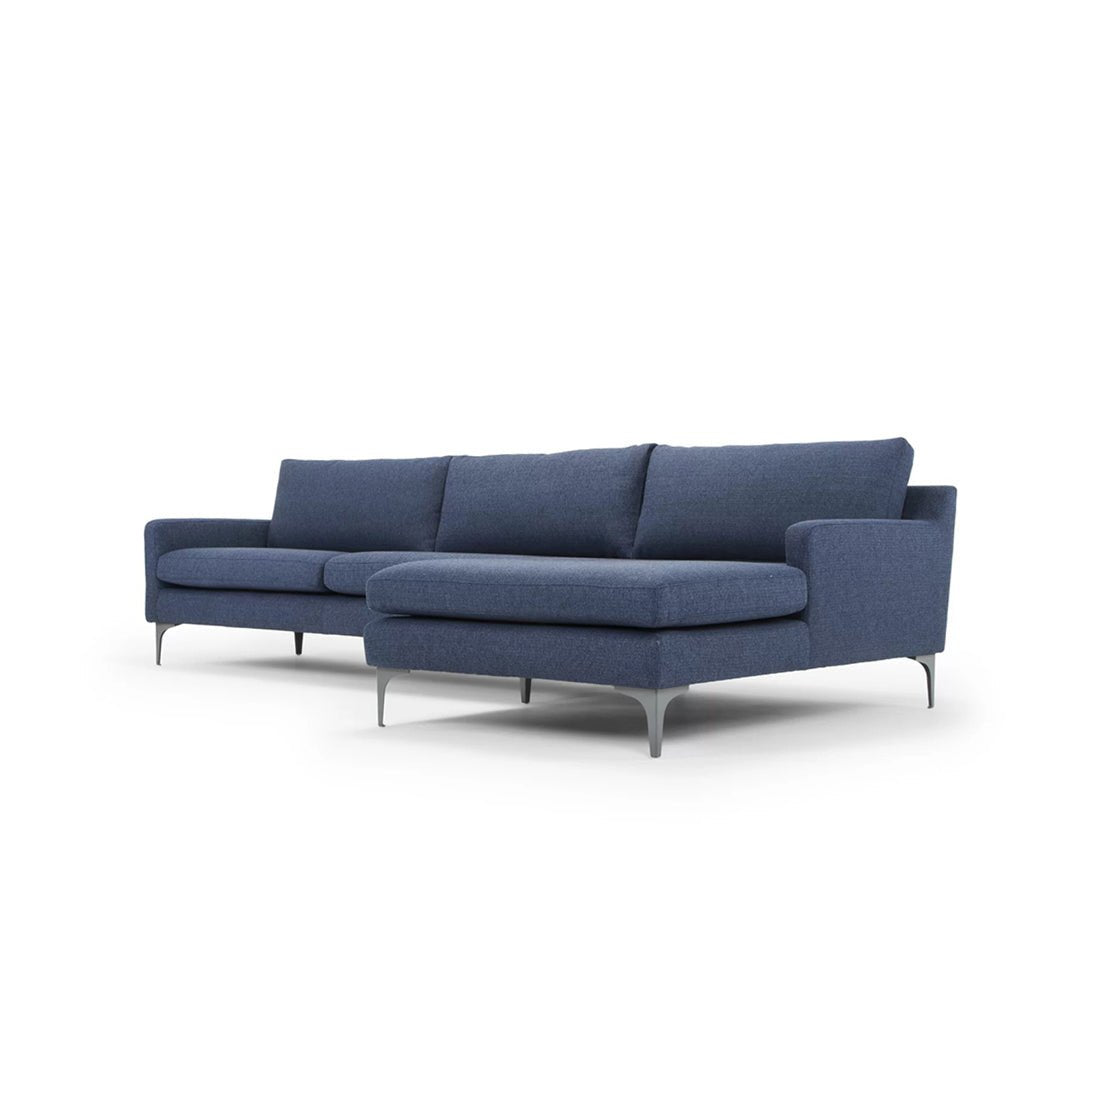 Torque - Franco 4 Seater Fabric L Shape Sofa for Living Room | Bedroom | Office - Torque India